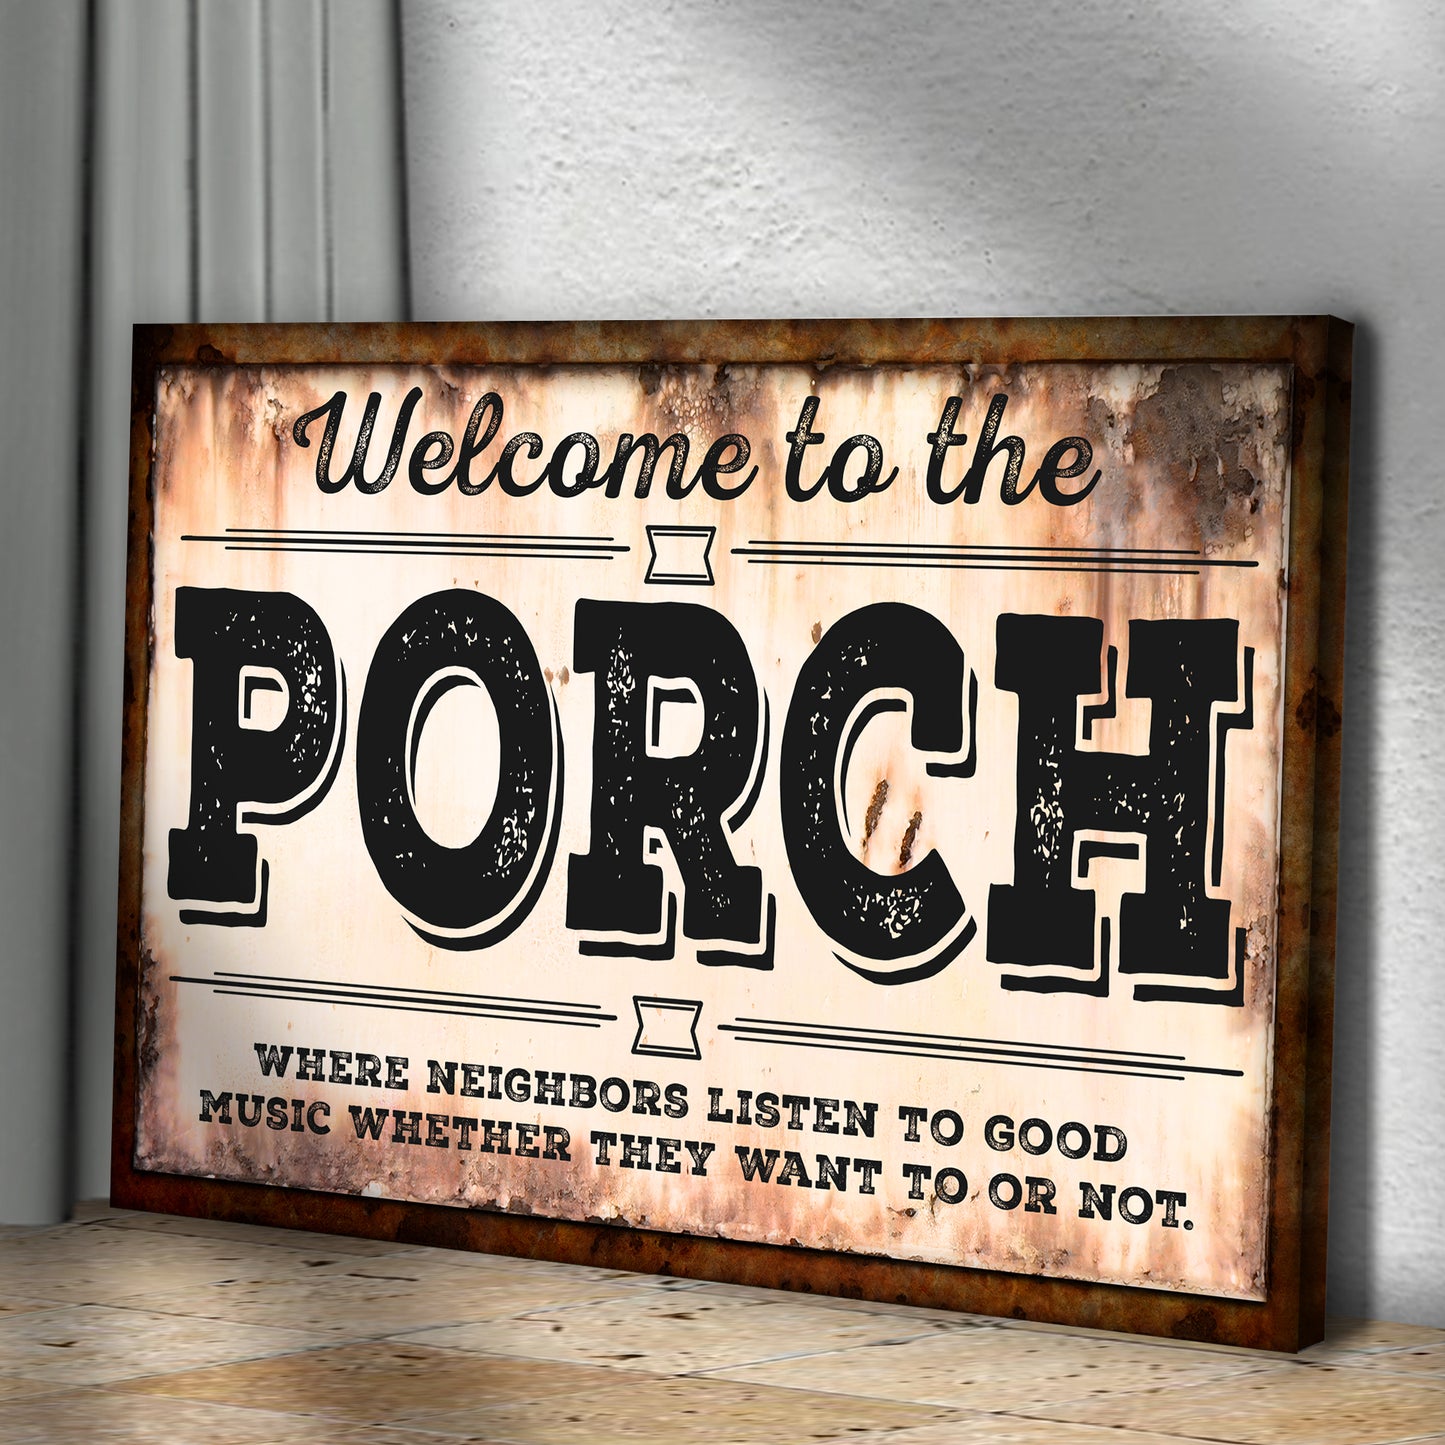 Neighbors Listen To Good Music Porch Sign